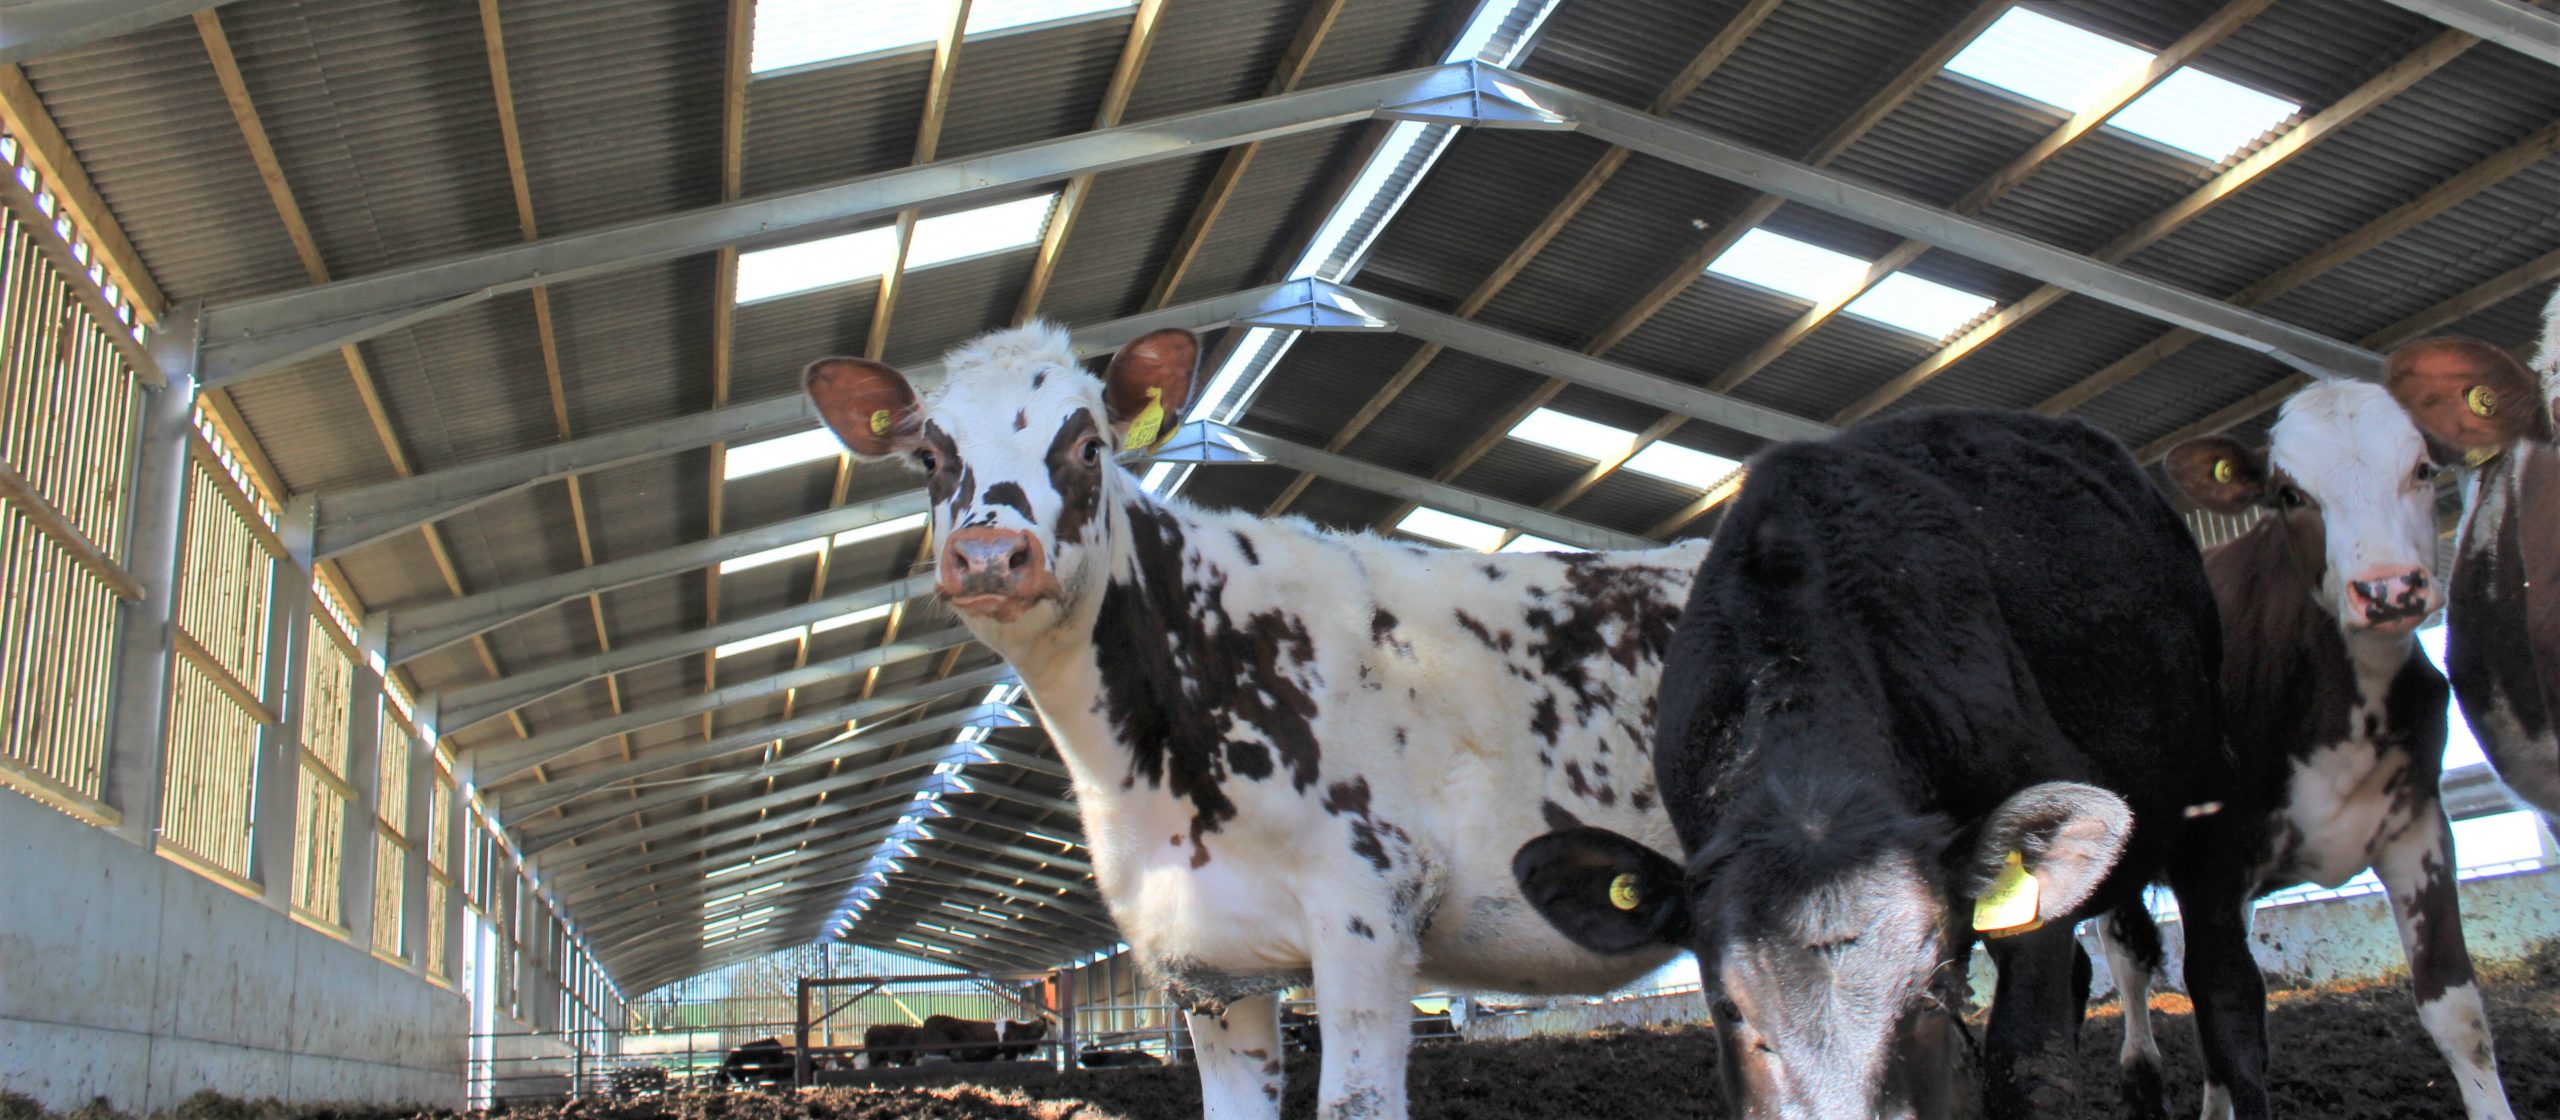 Dairy Farm Livestock Building